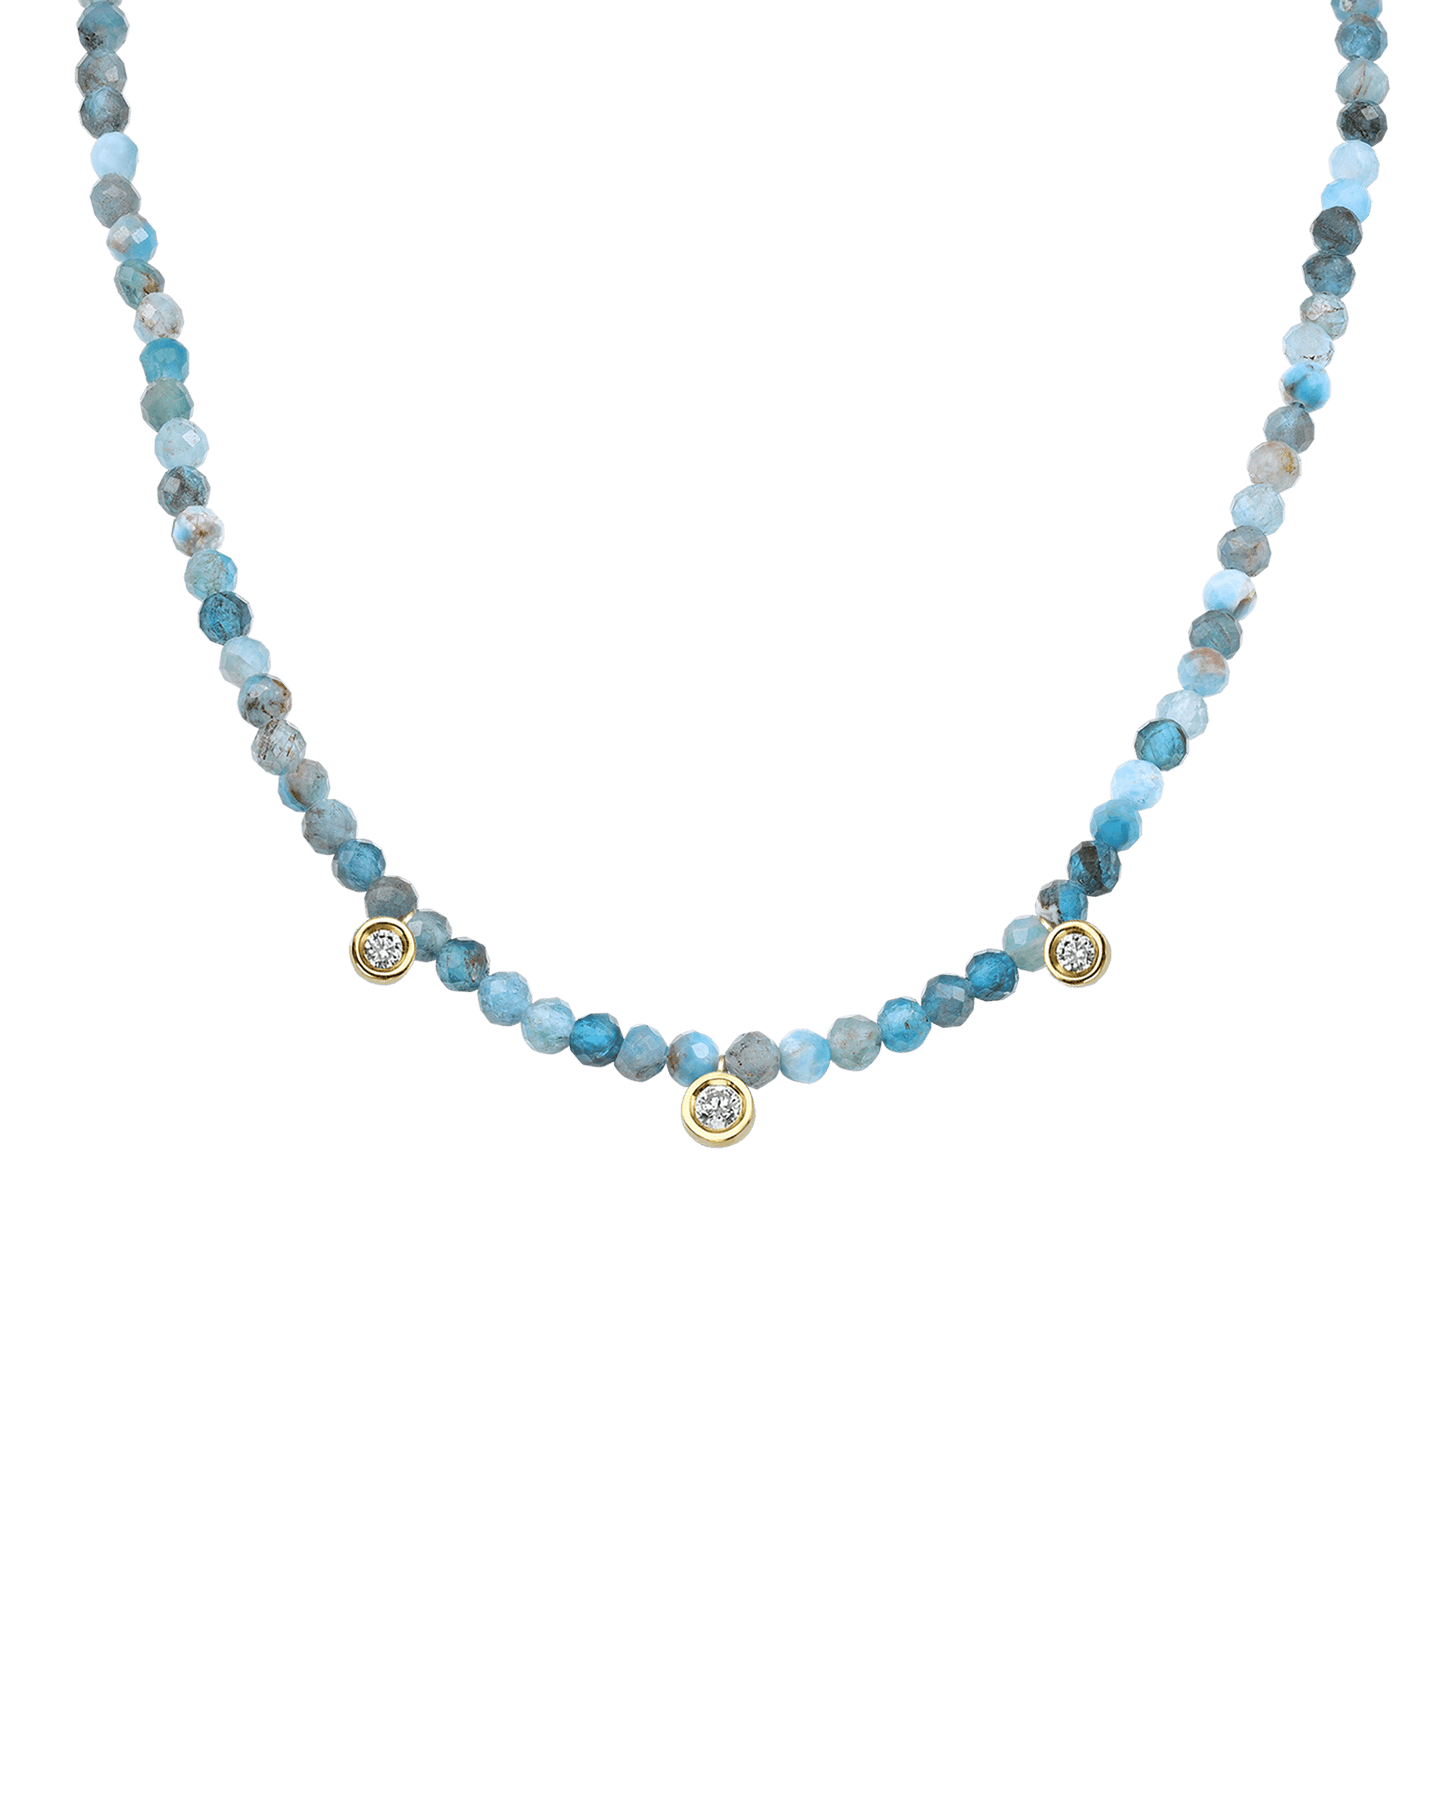 Black Spinel Gemstone & Three diamonds Necklace - 14K White Gold Necklaces magal-dev 